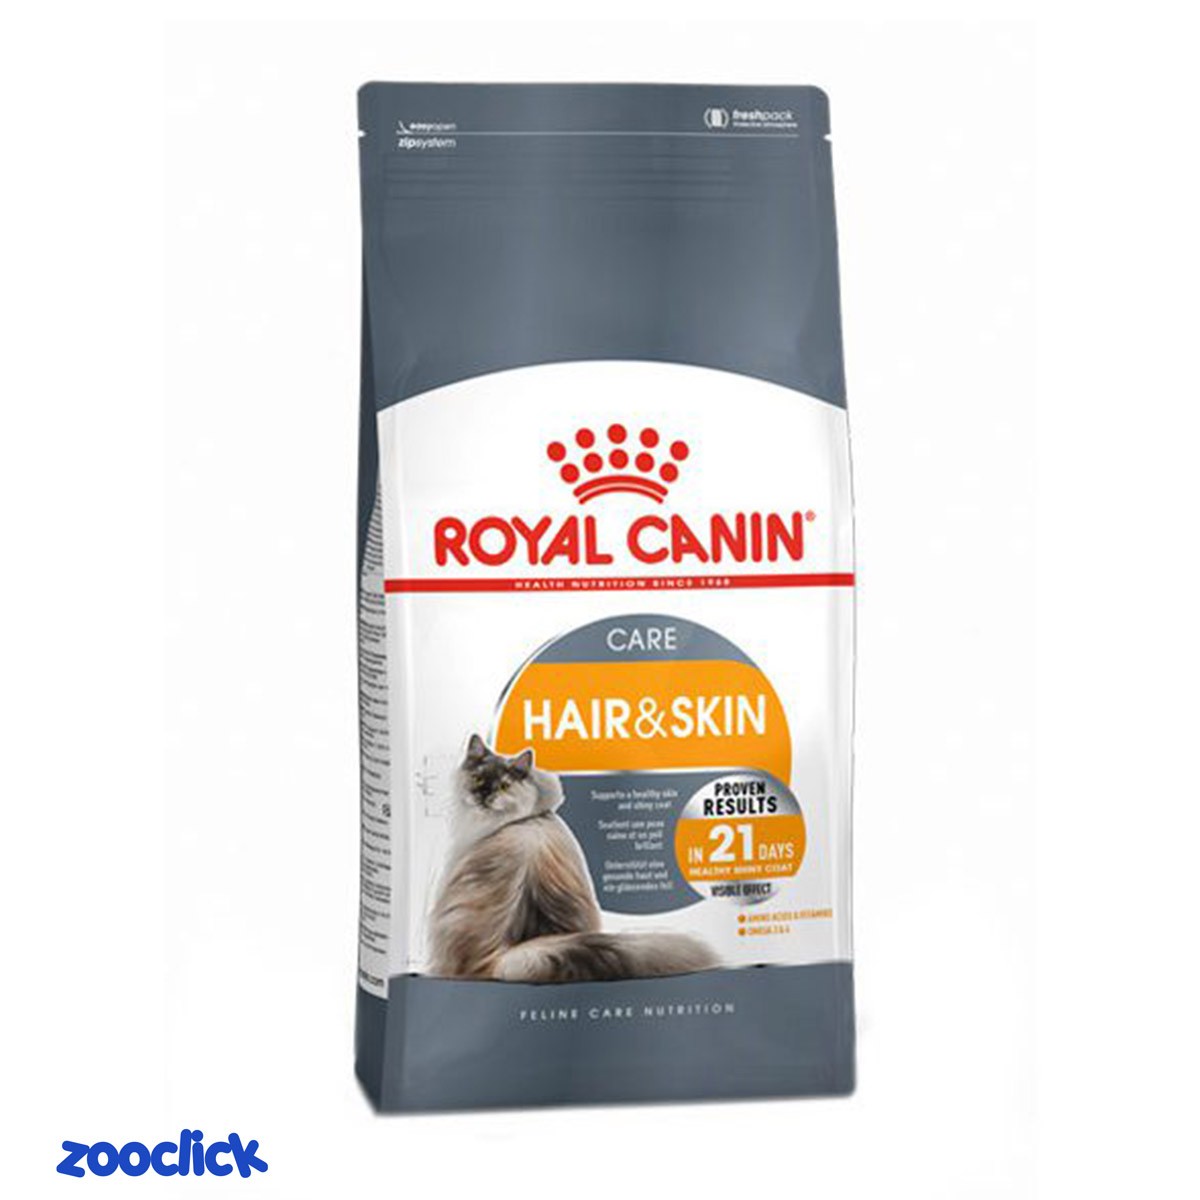 royal canin hair & skin